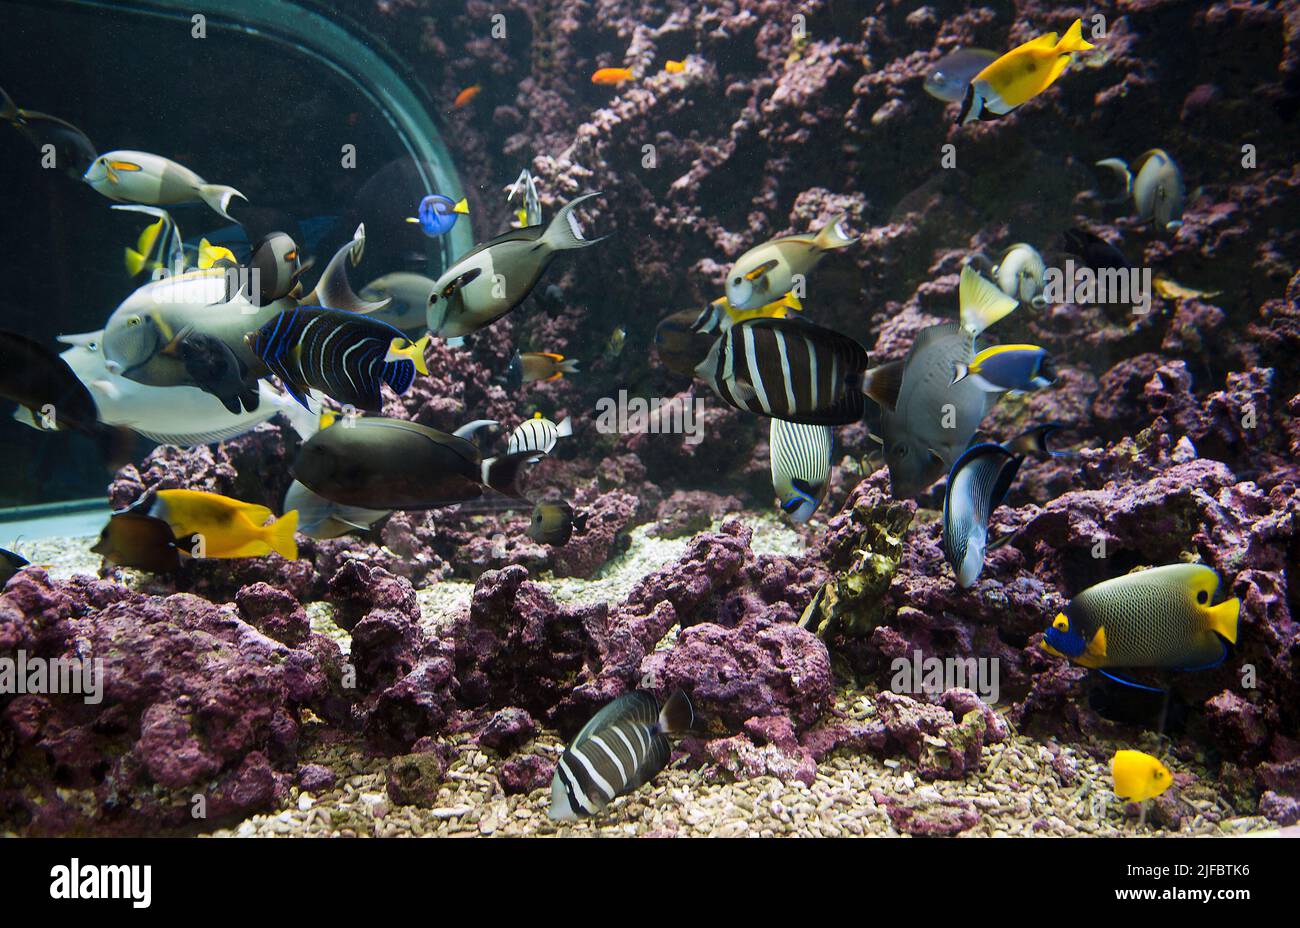 Sezione di una grande esposizione di pesci marini tropicali al Bergen Aquarium, Norvegia. Foto da Gennaio 2012. Foto Stock